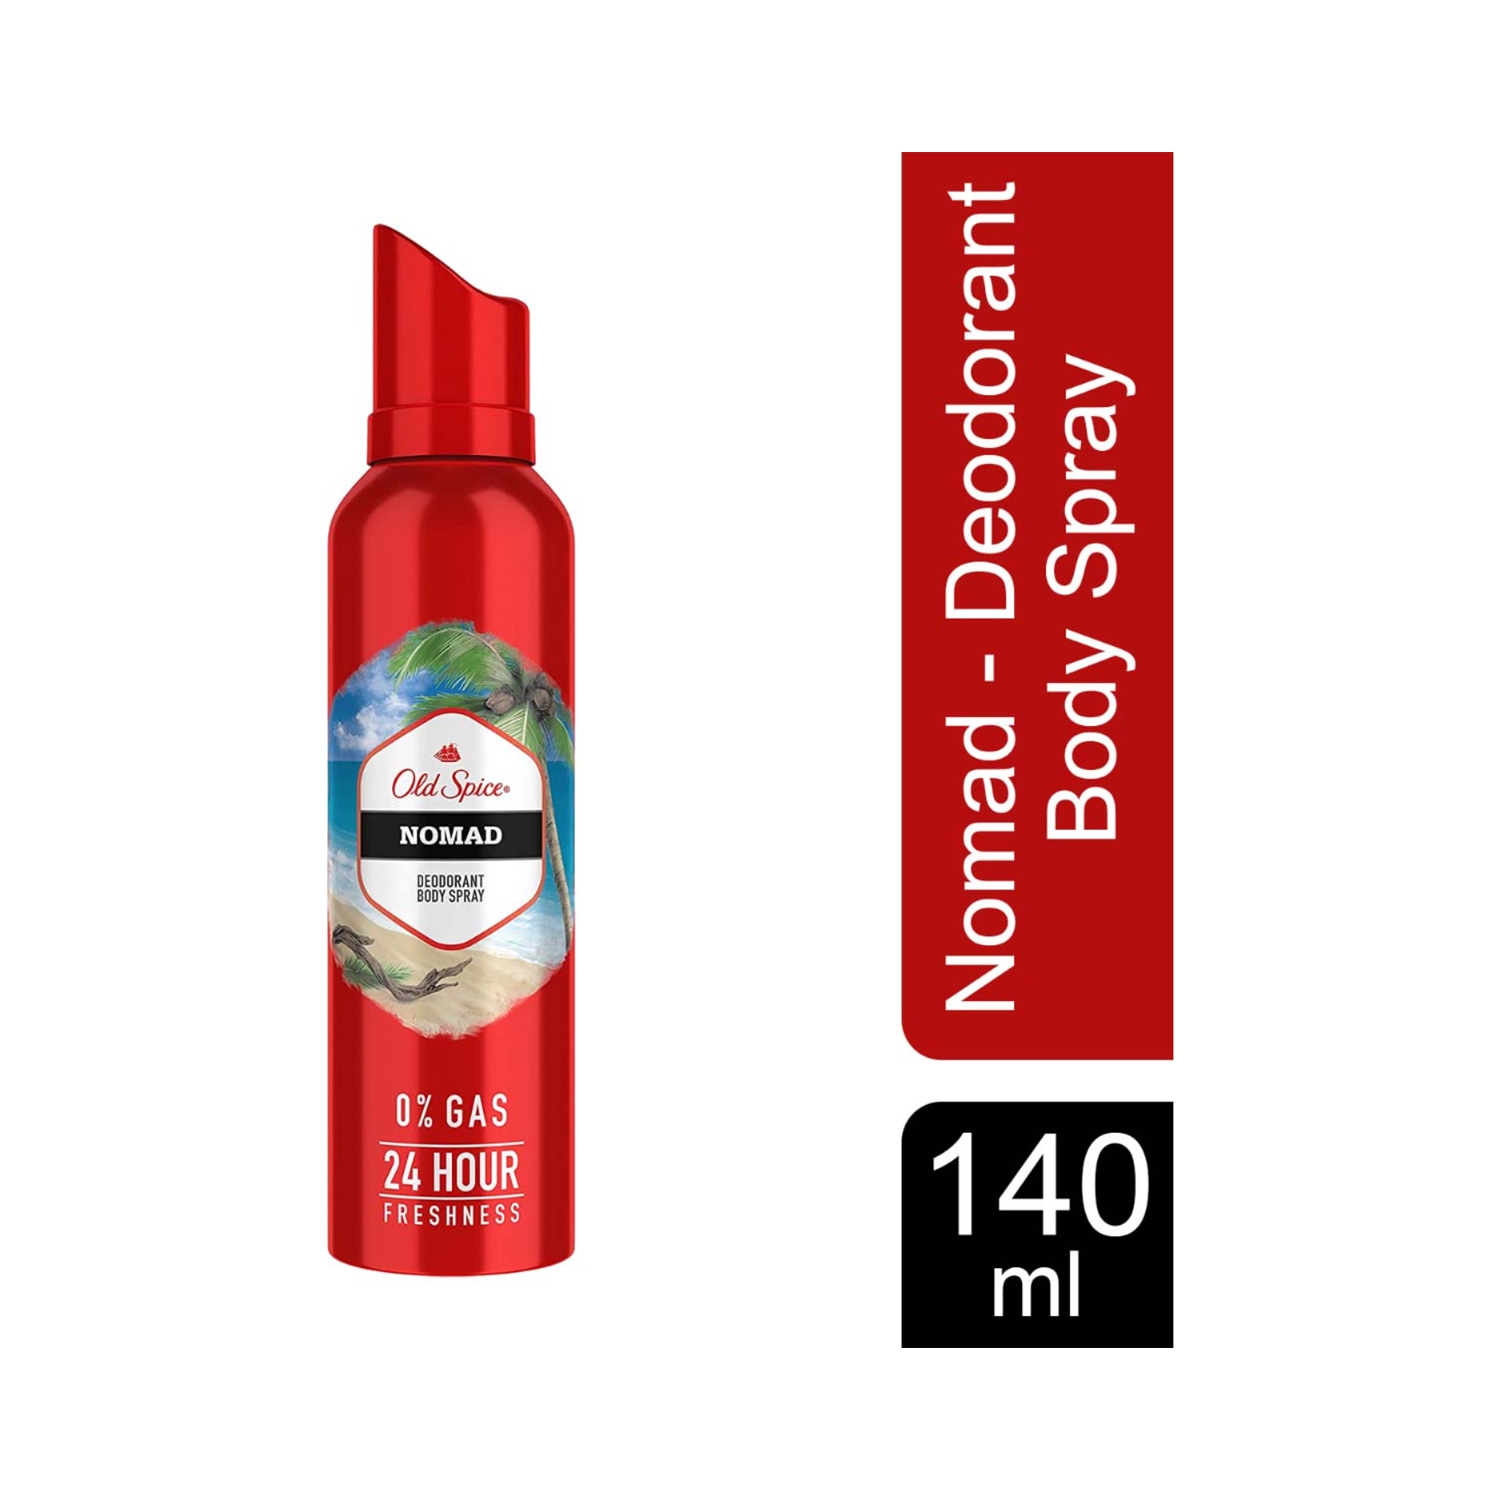 Old Spice | Old Spice Nomad No Gas Deodorant Body Spray (140ml)